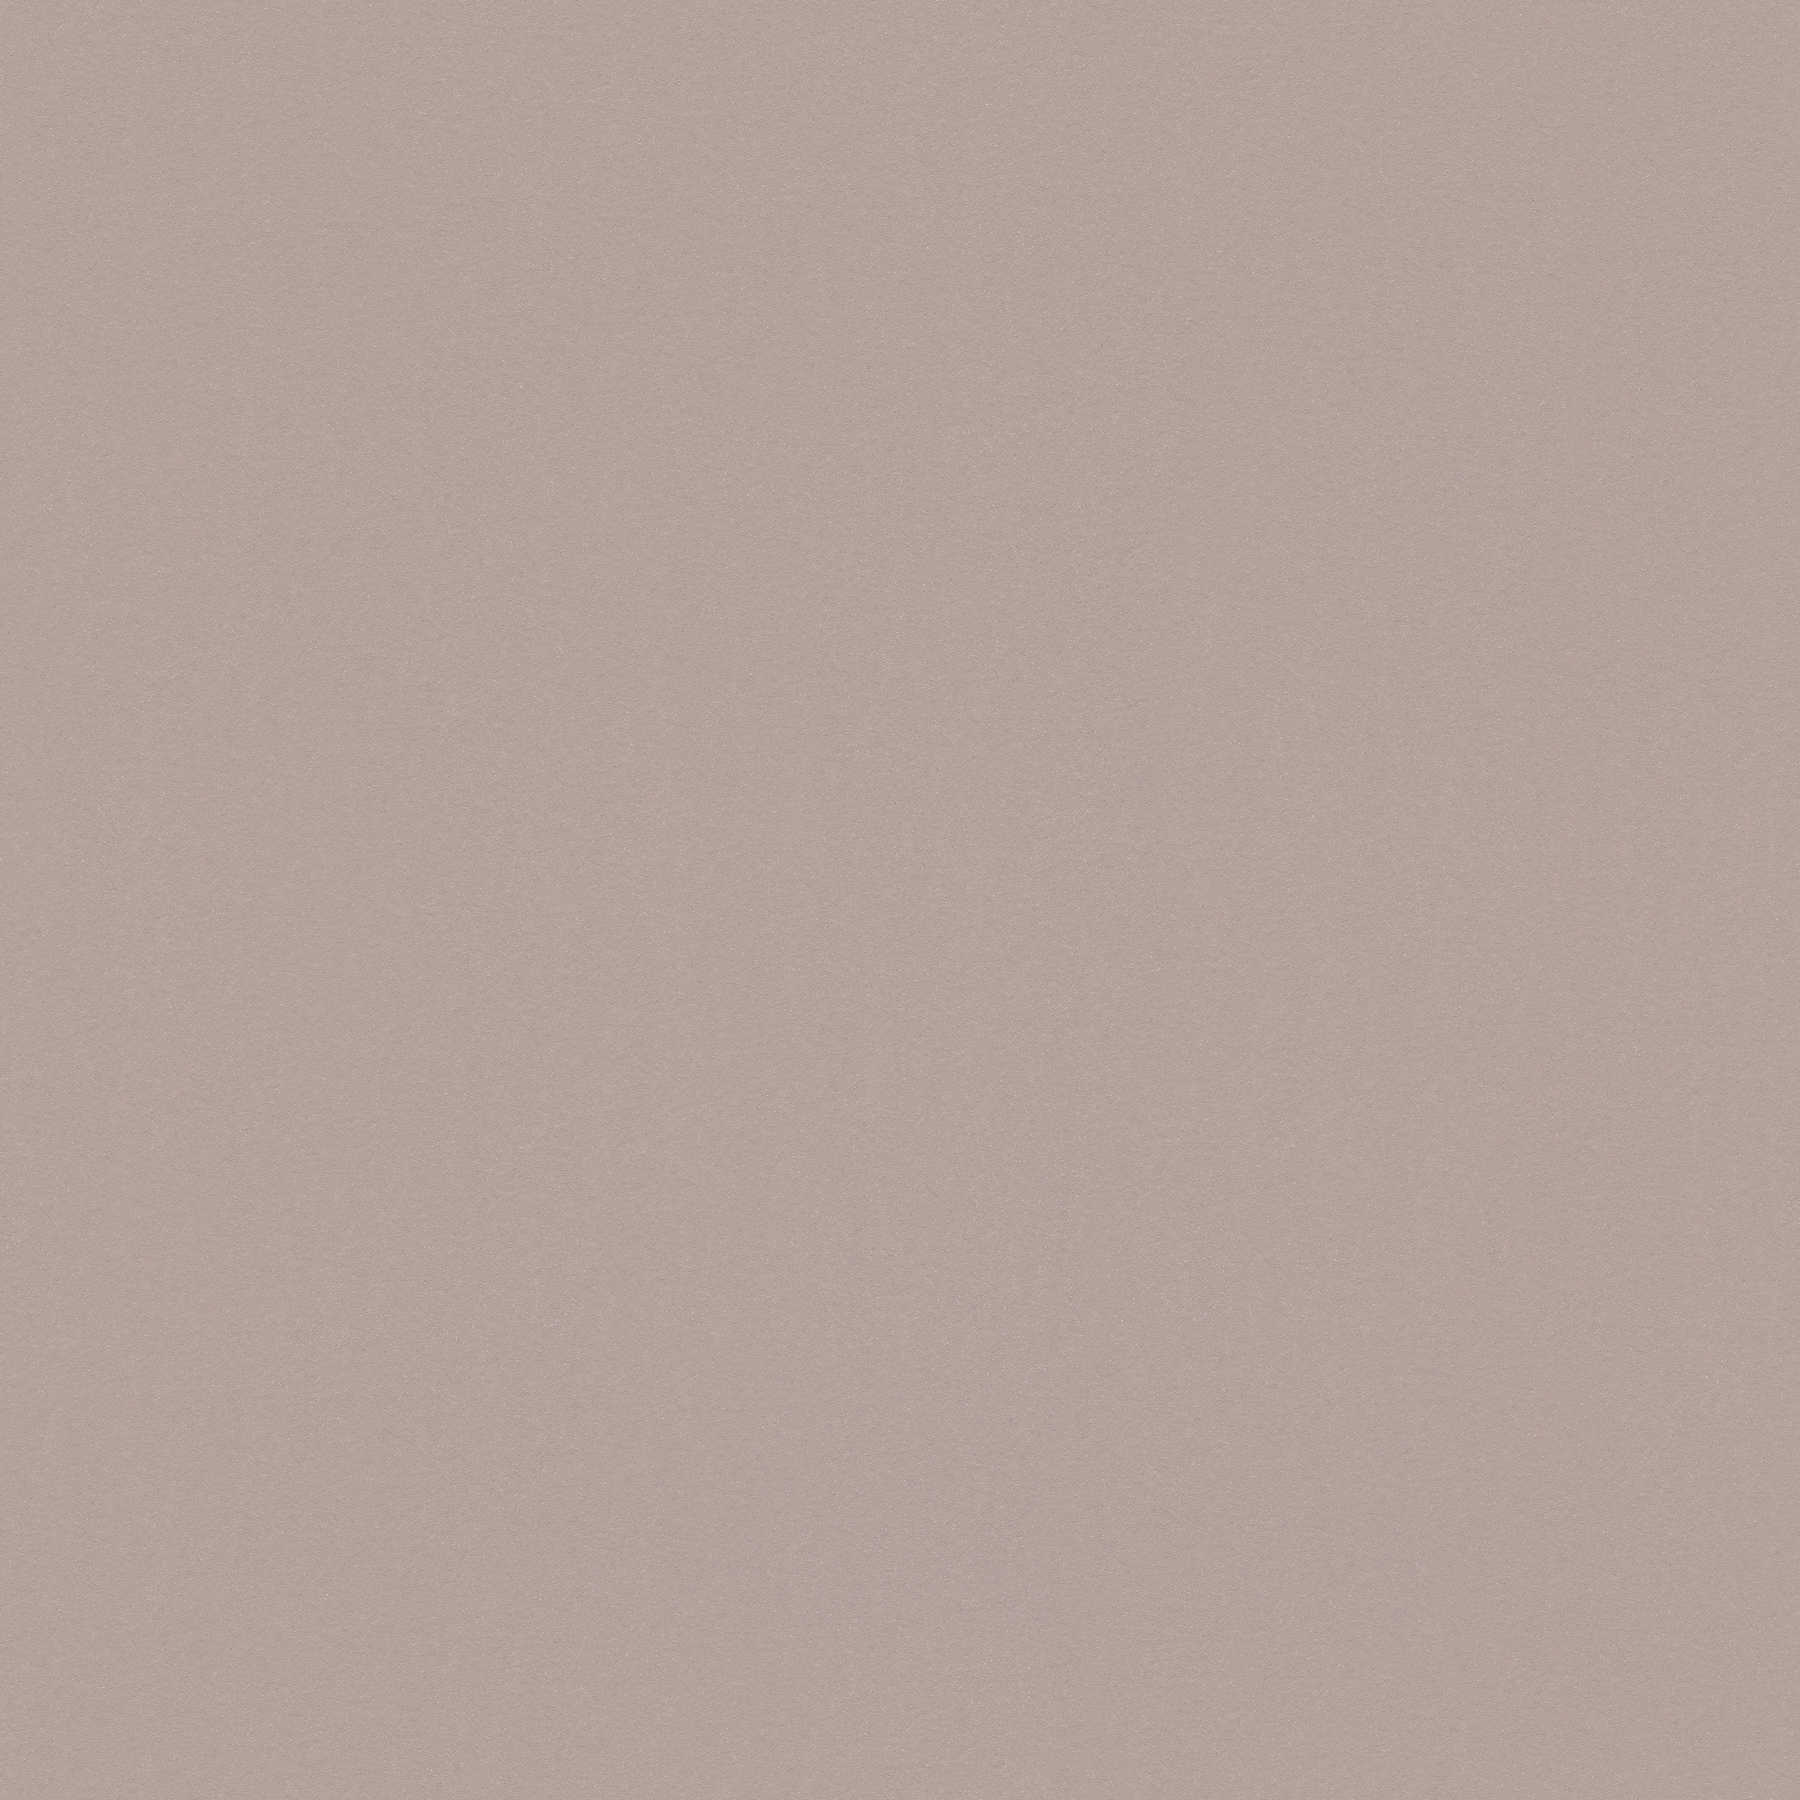         Light brown non-woven wallpaper plain, matte & natural colour - grey
    